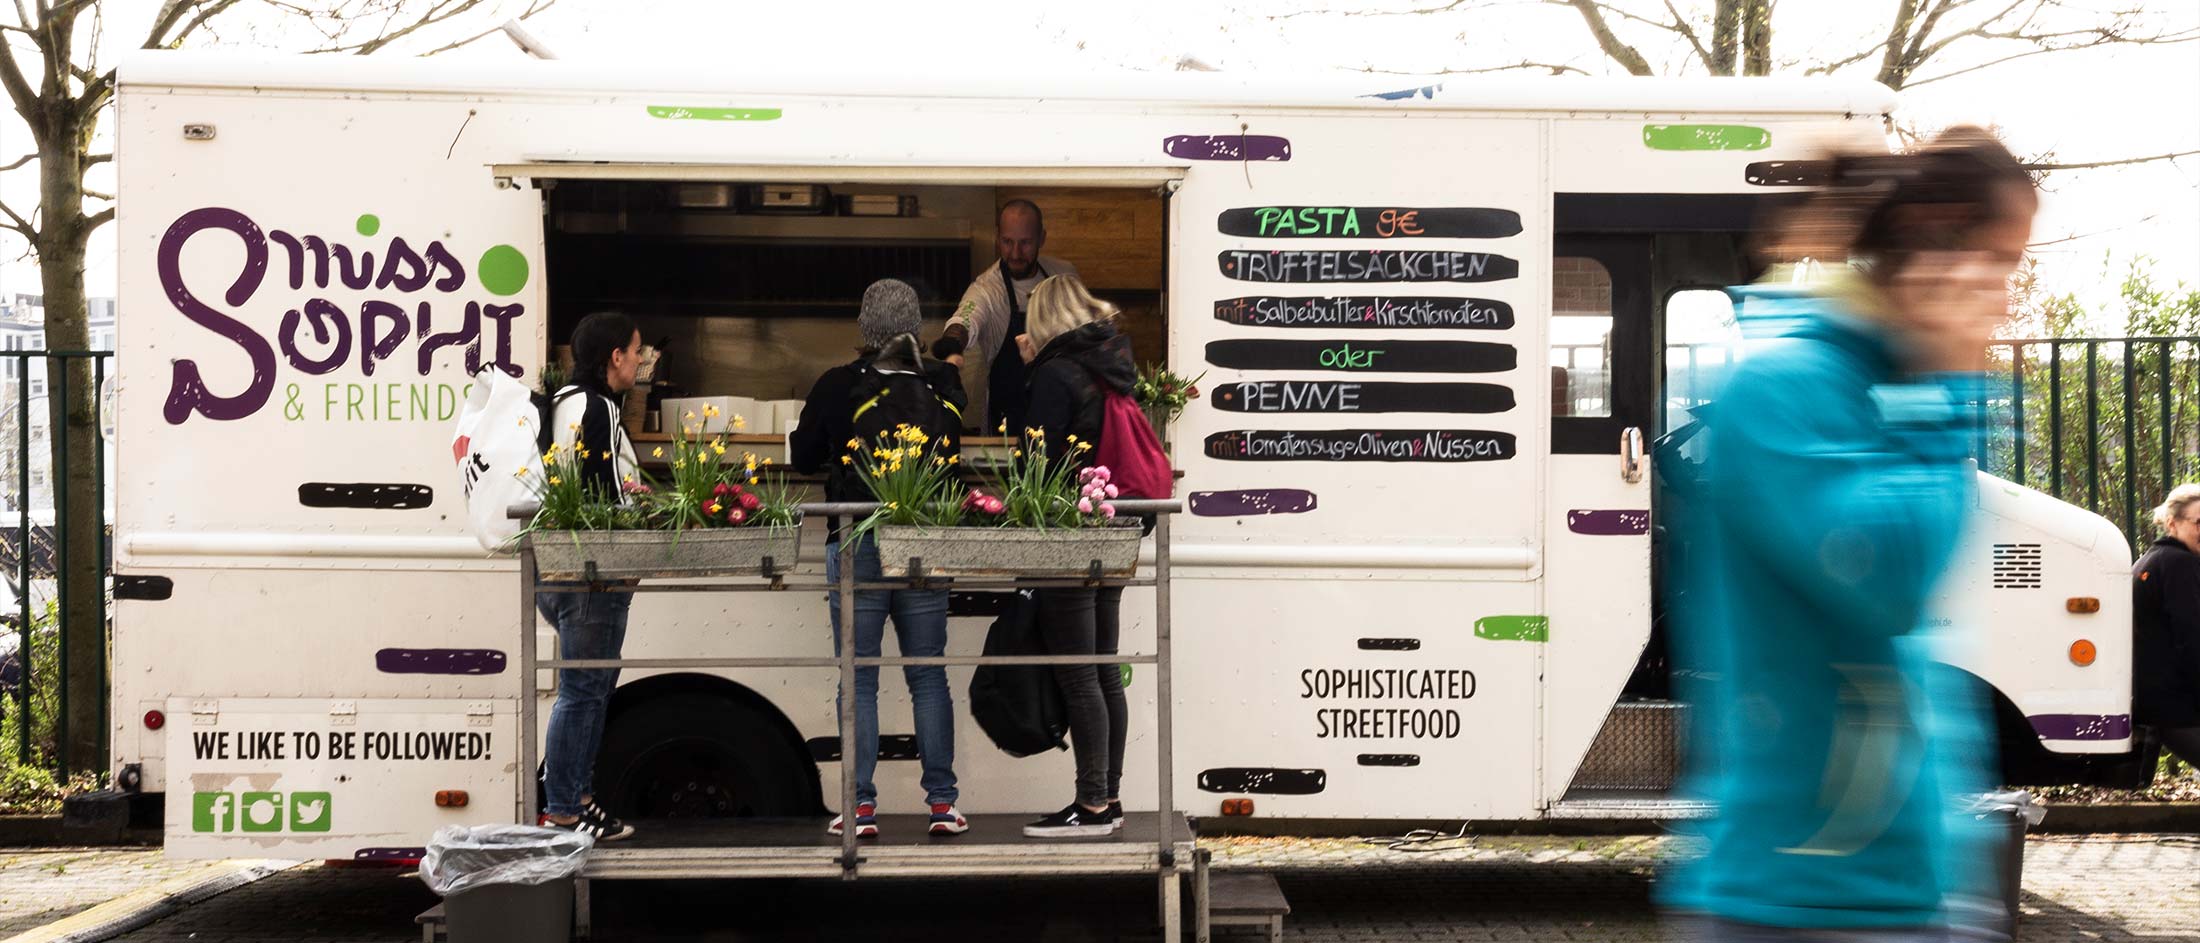 Mobiles Catering: Food-Truck MISS SOPHI & Friends von cateringart in Neuss.